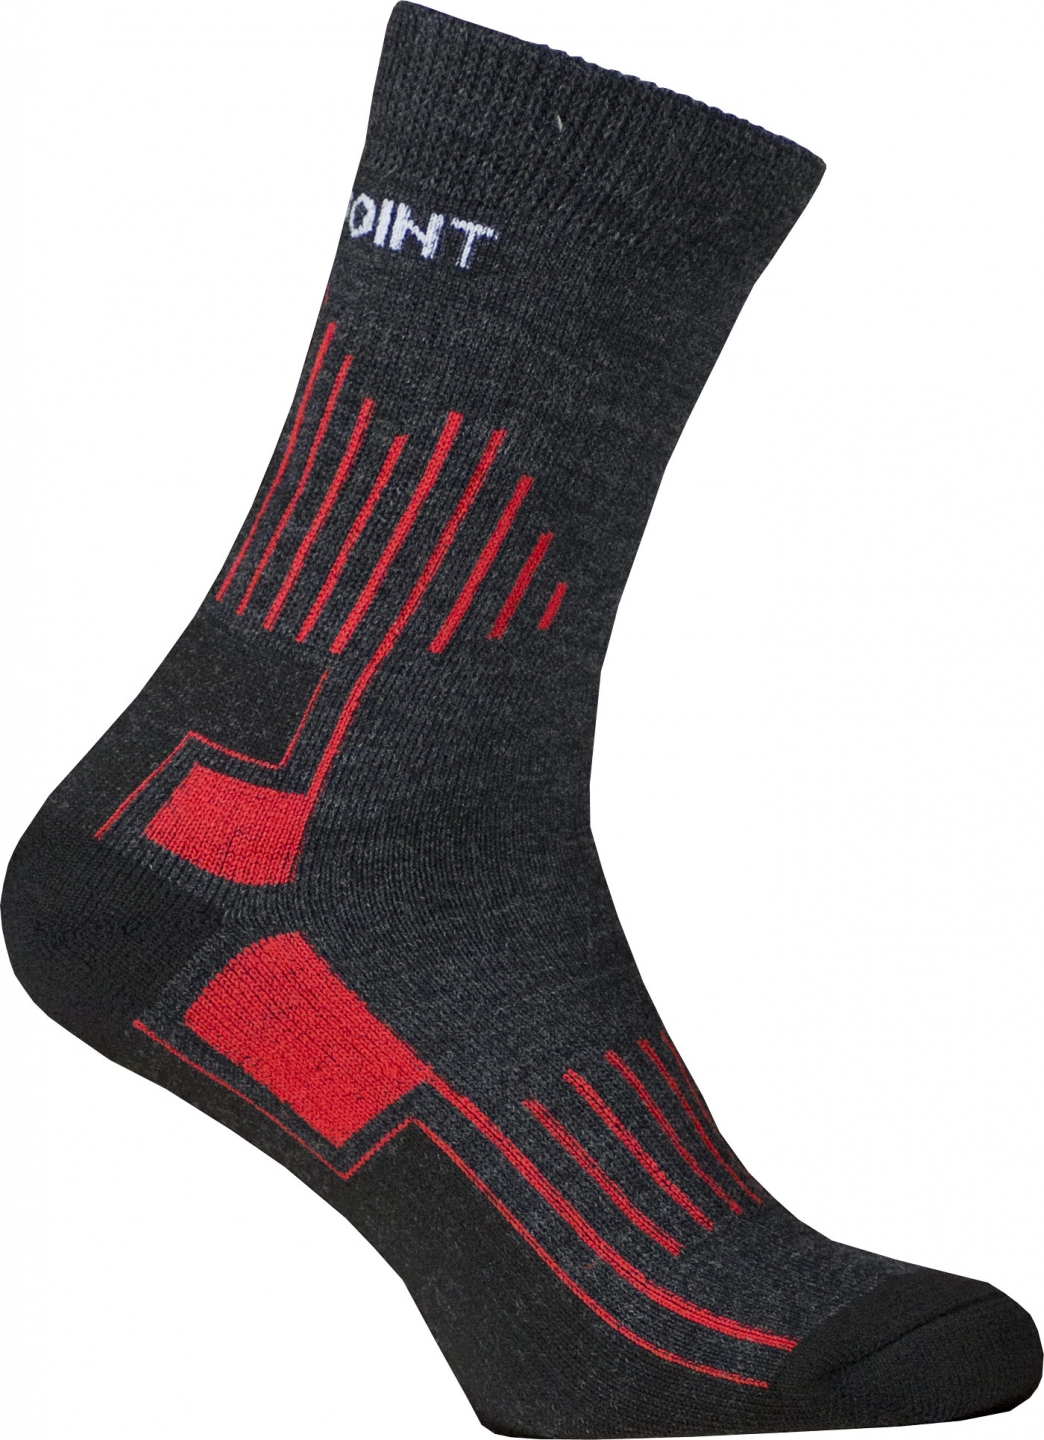 High Point ponožky LORD 2.0 MERINO Velikost: 39-42